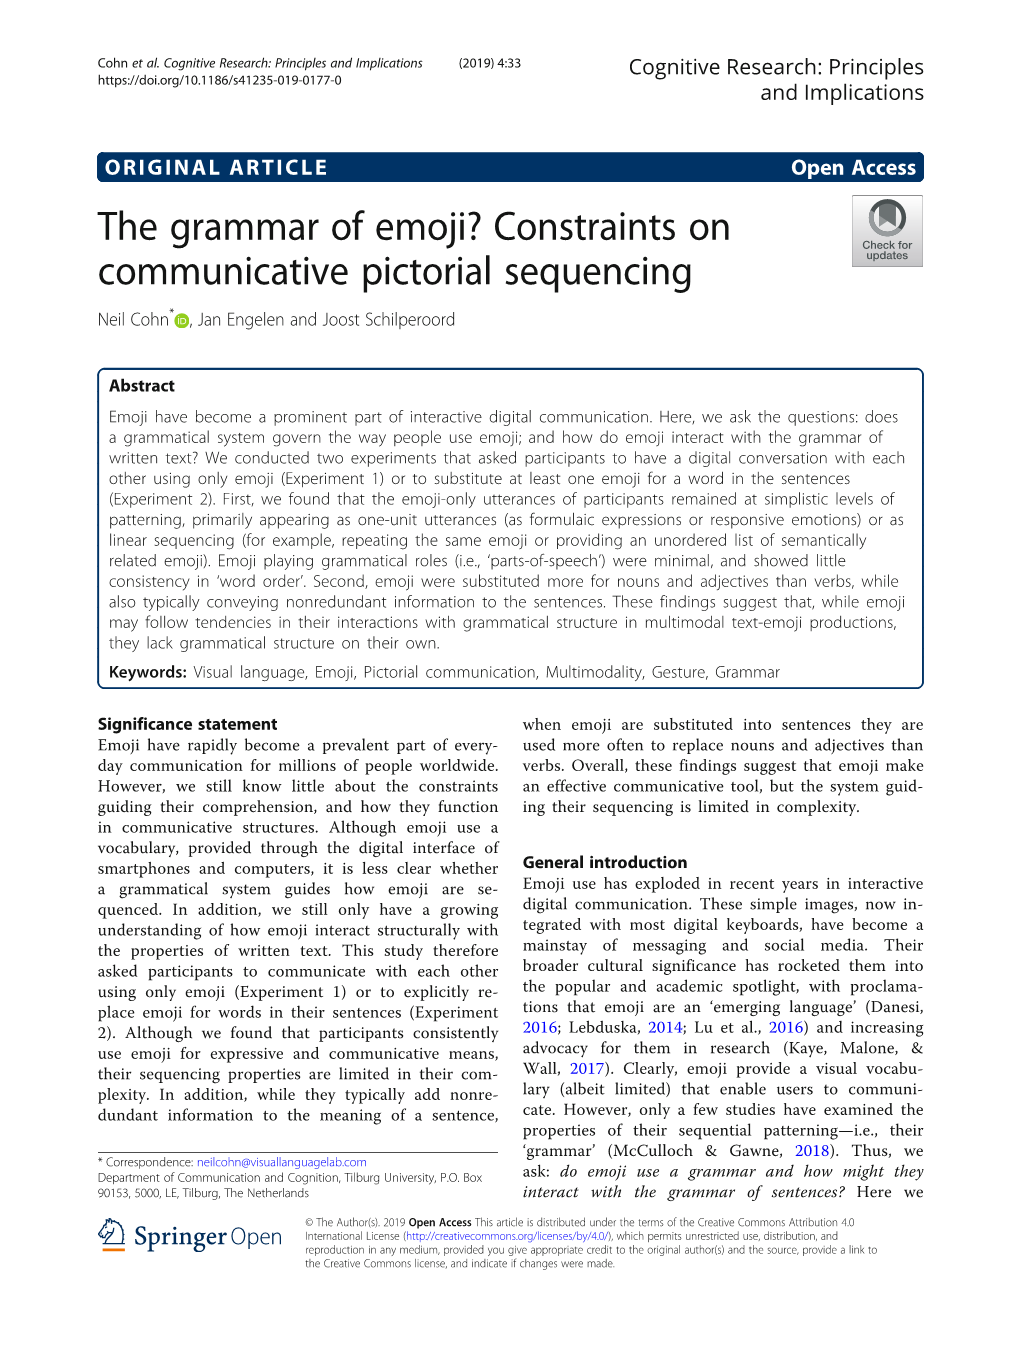 The Grammar of Emoji? Constraints on Communicative Pictorial Sequencing Neil Cohn* , Jan Engelen and Joost Schilperoord